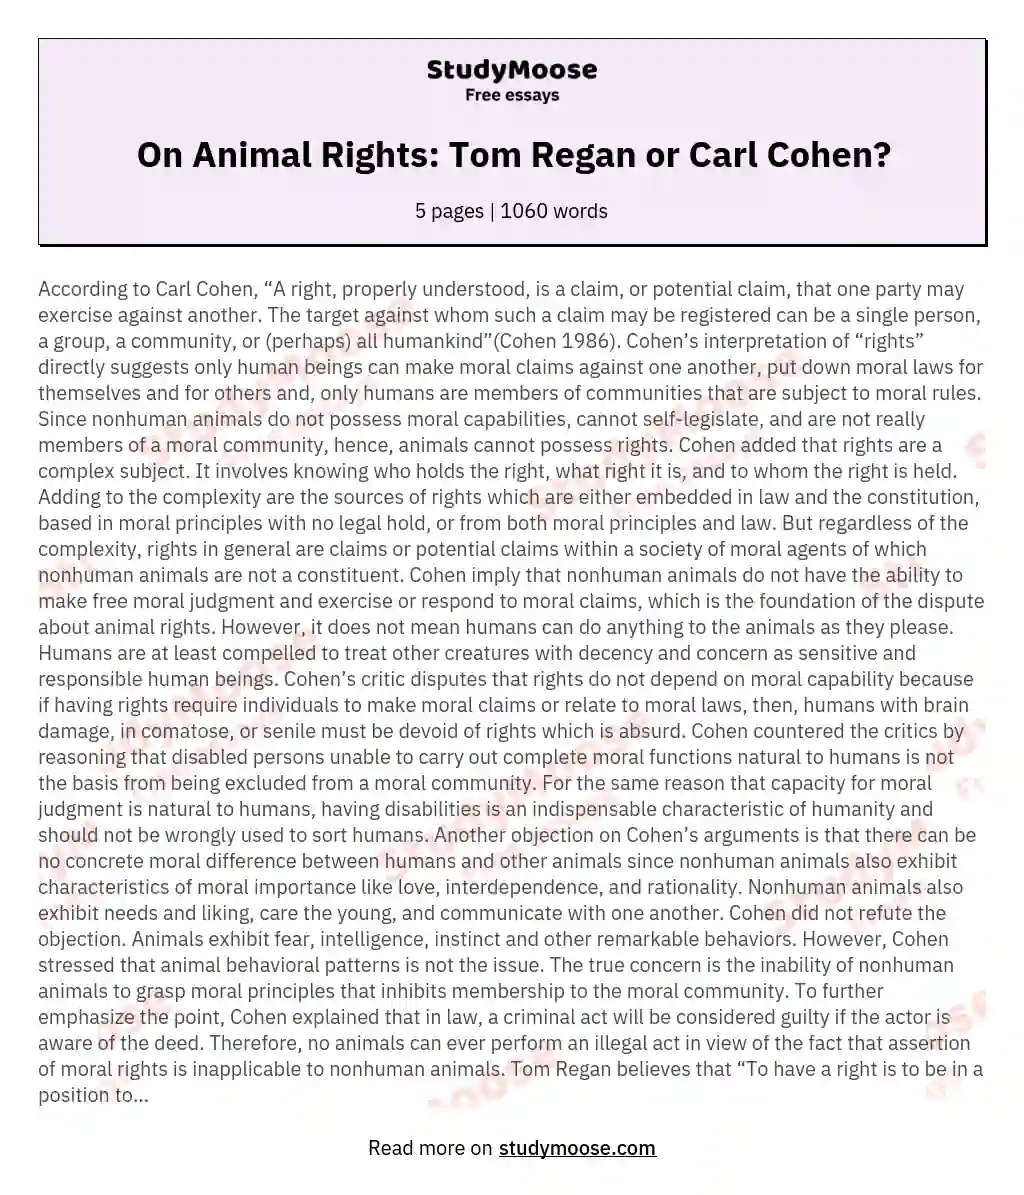 On Animal Rights: Tom Regan or Carl Cohen?